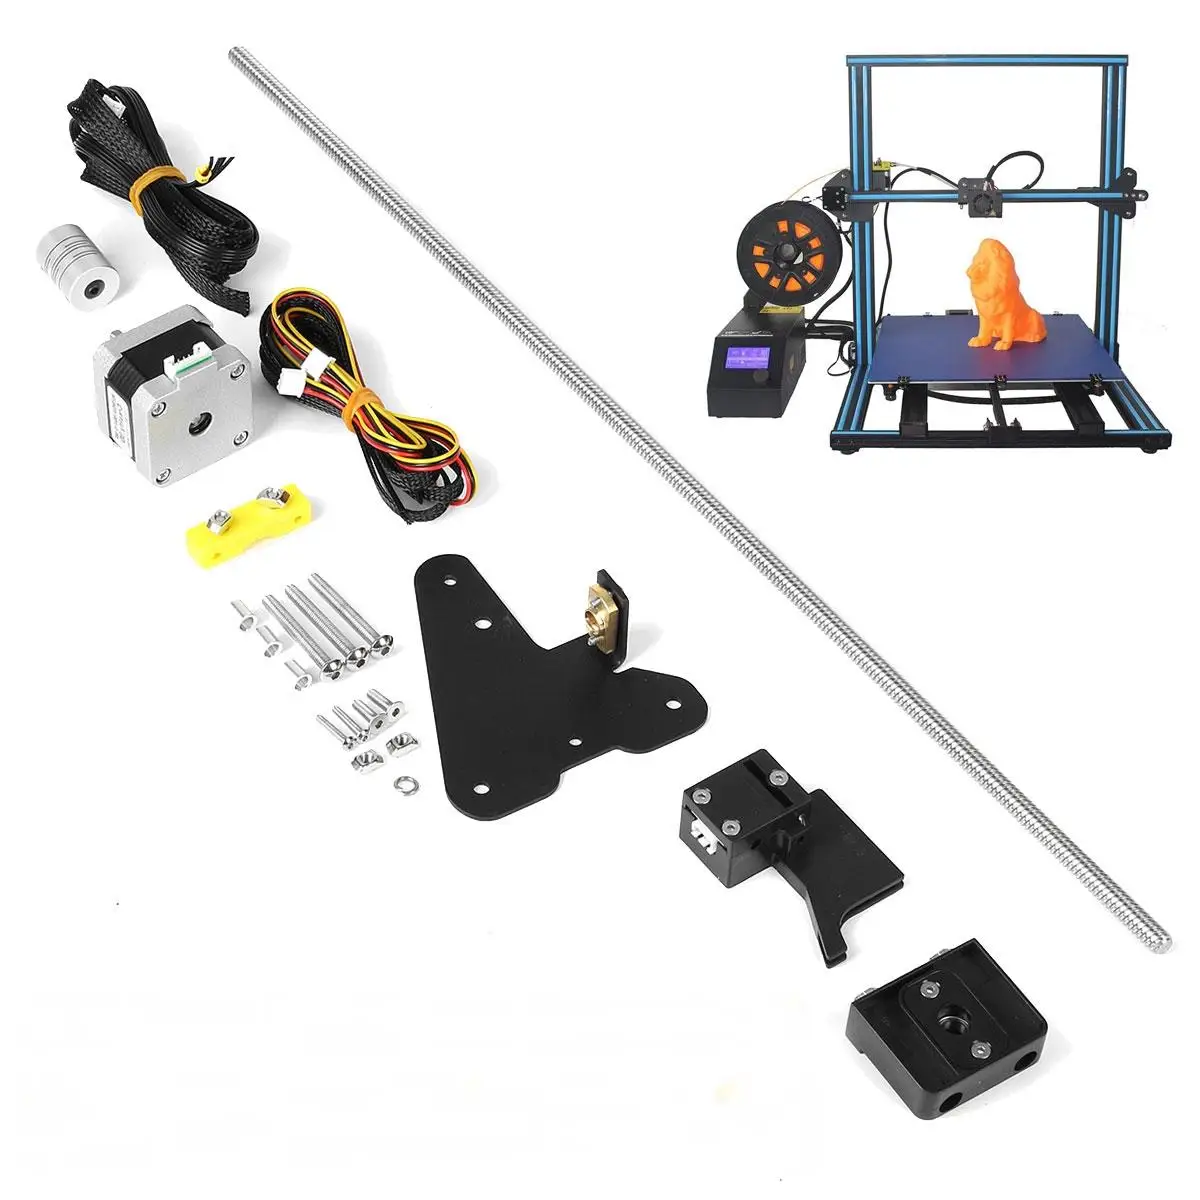 

Creality 3D Dual Z-axis Upgrade Kit 515MM Lead Screw 42-34 Motor + Filament Sensor Kits Upgrade For CR-10 3D Printer parts